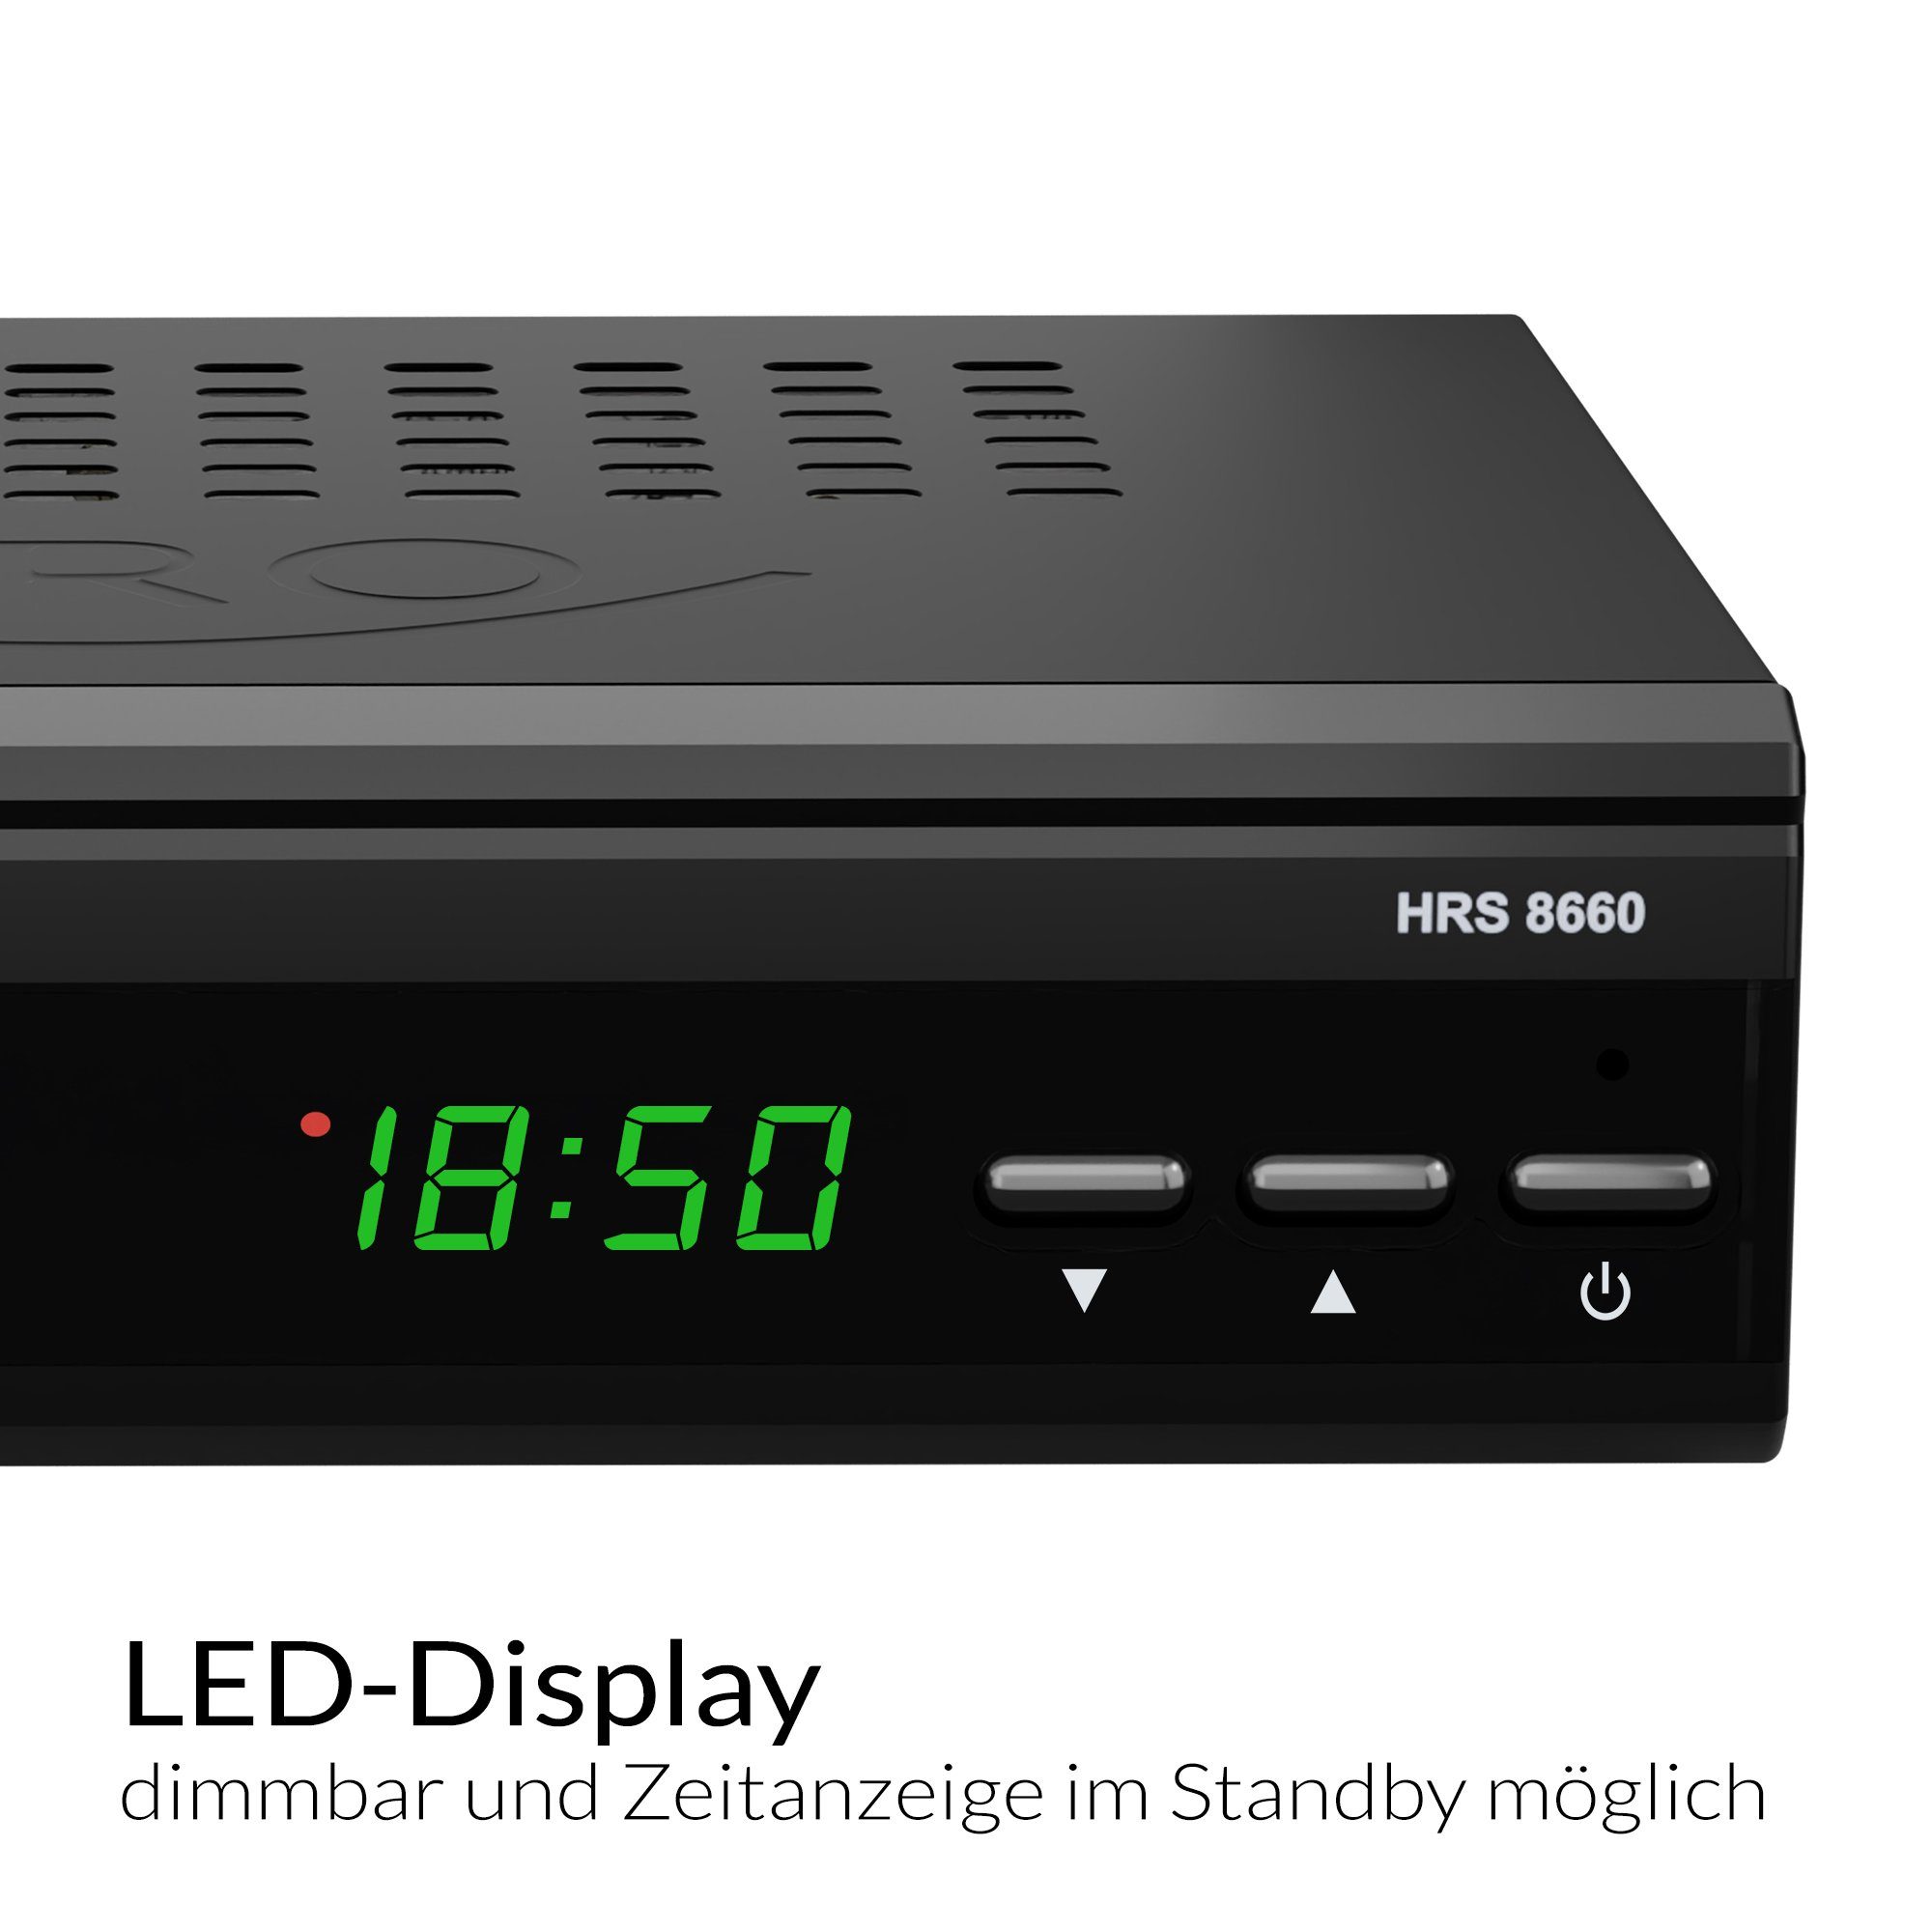 8660 HD LED-Display, einfache Timeshift, PVR-Ready, SAT-Receiver HRS Installation, Xoro